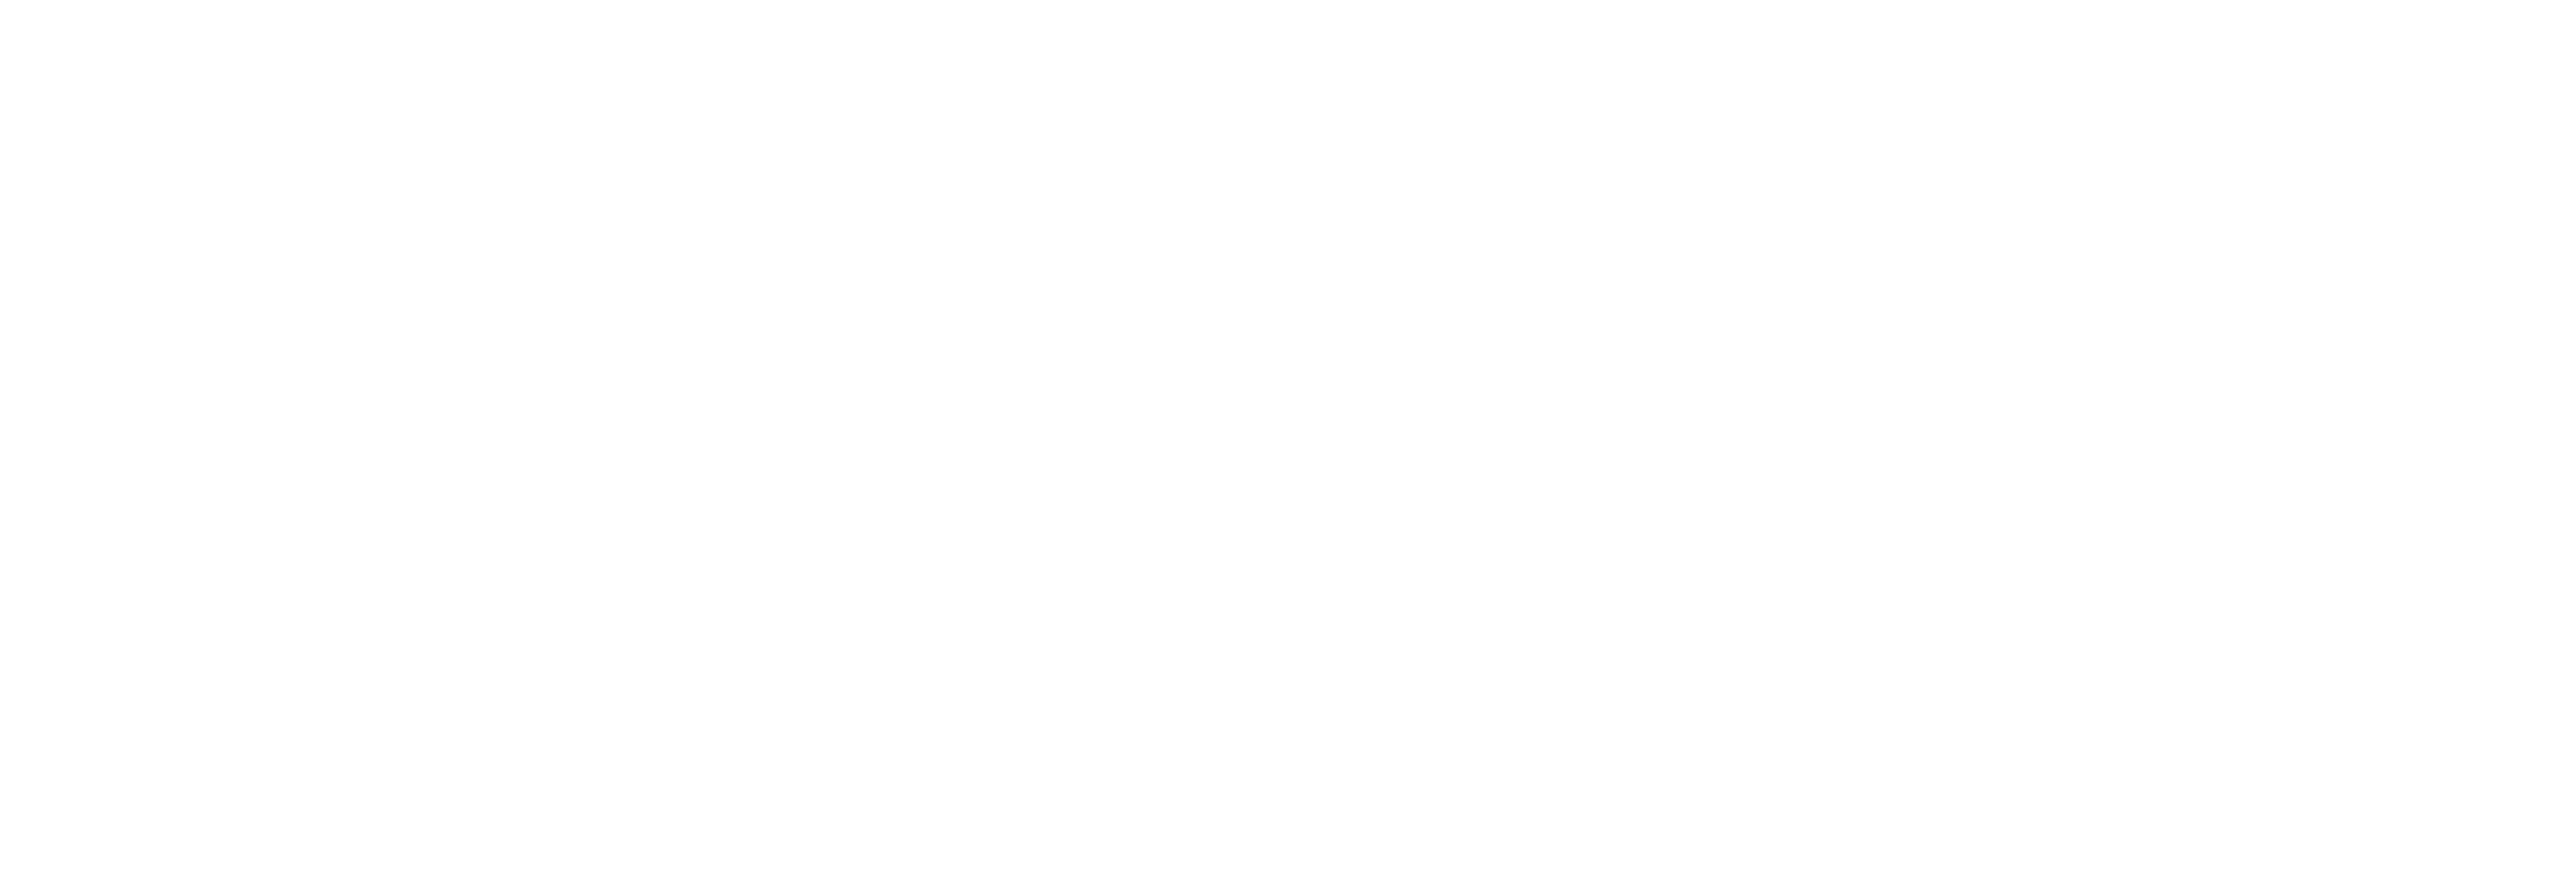 The Good Community